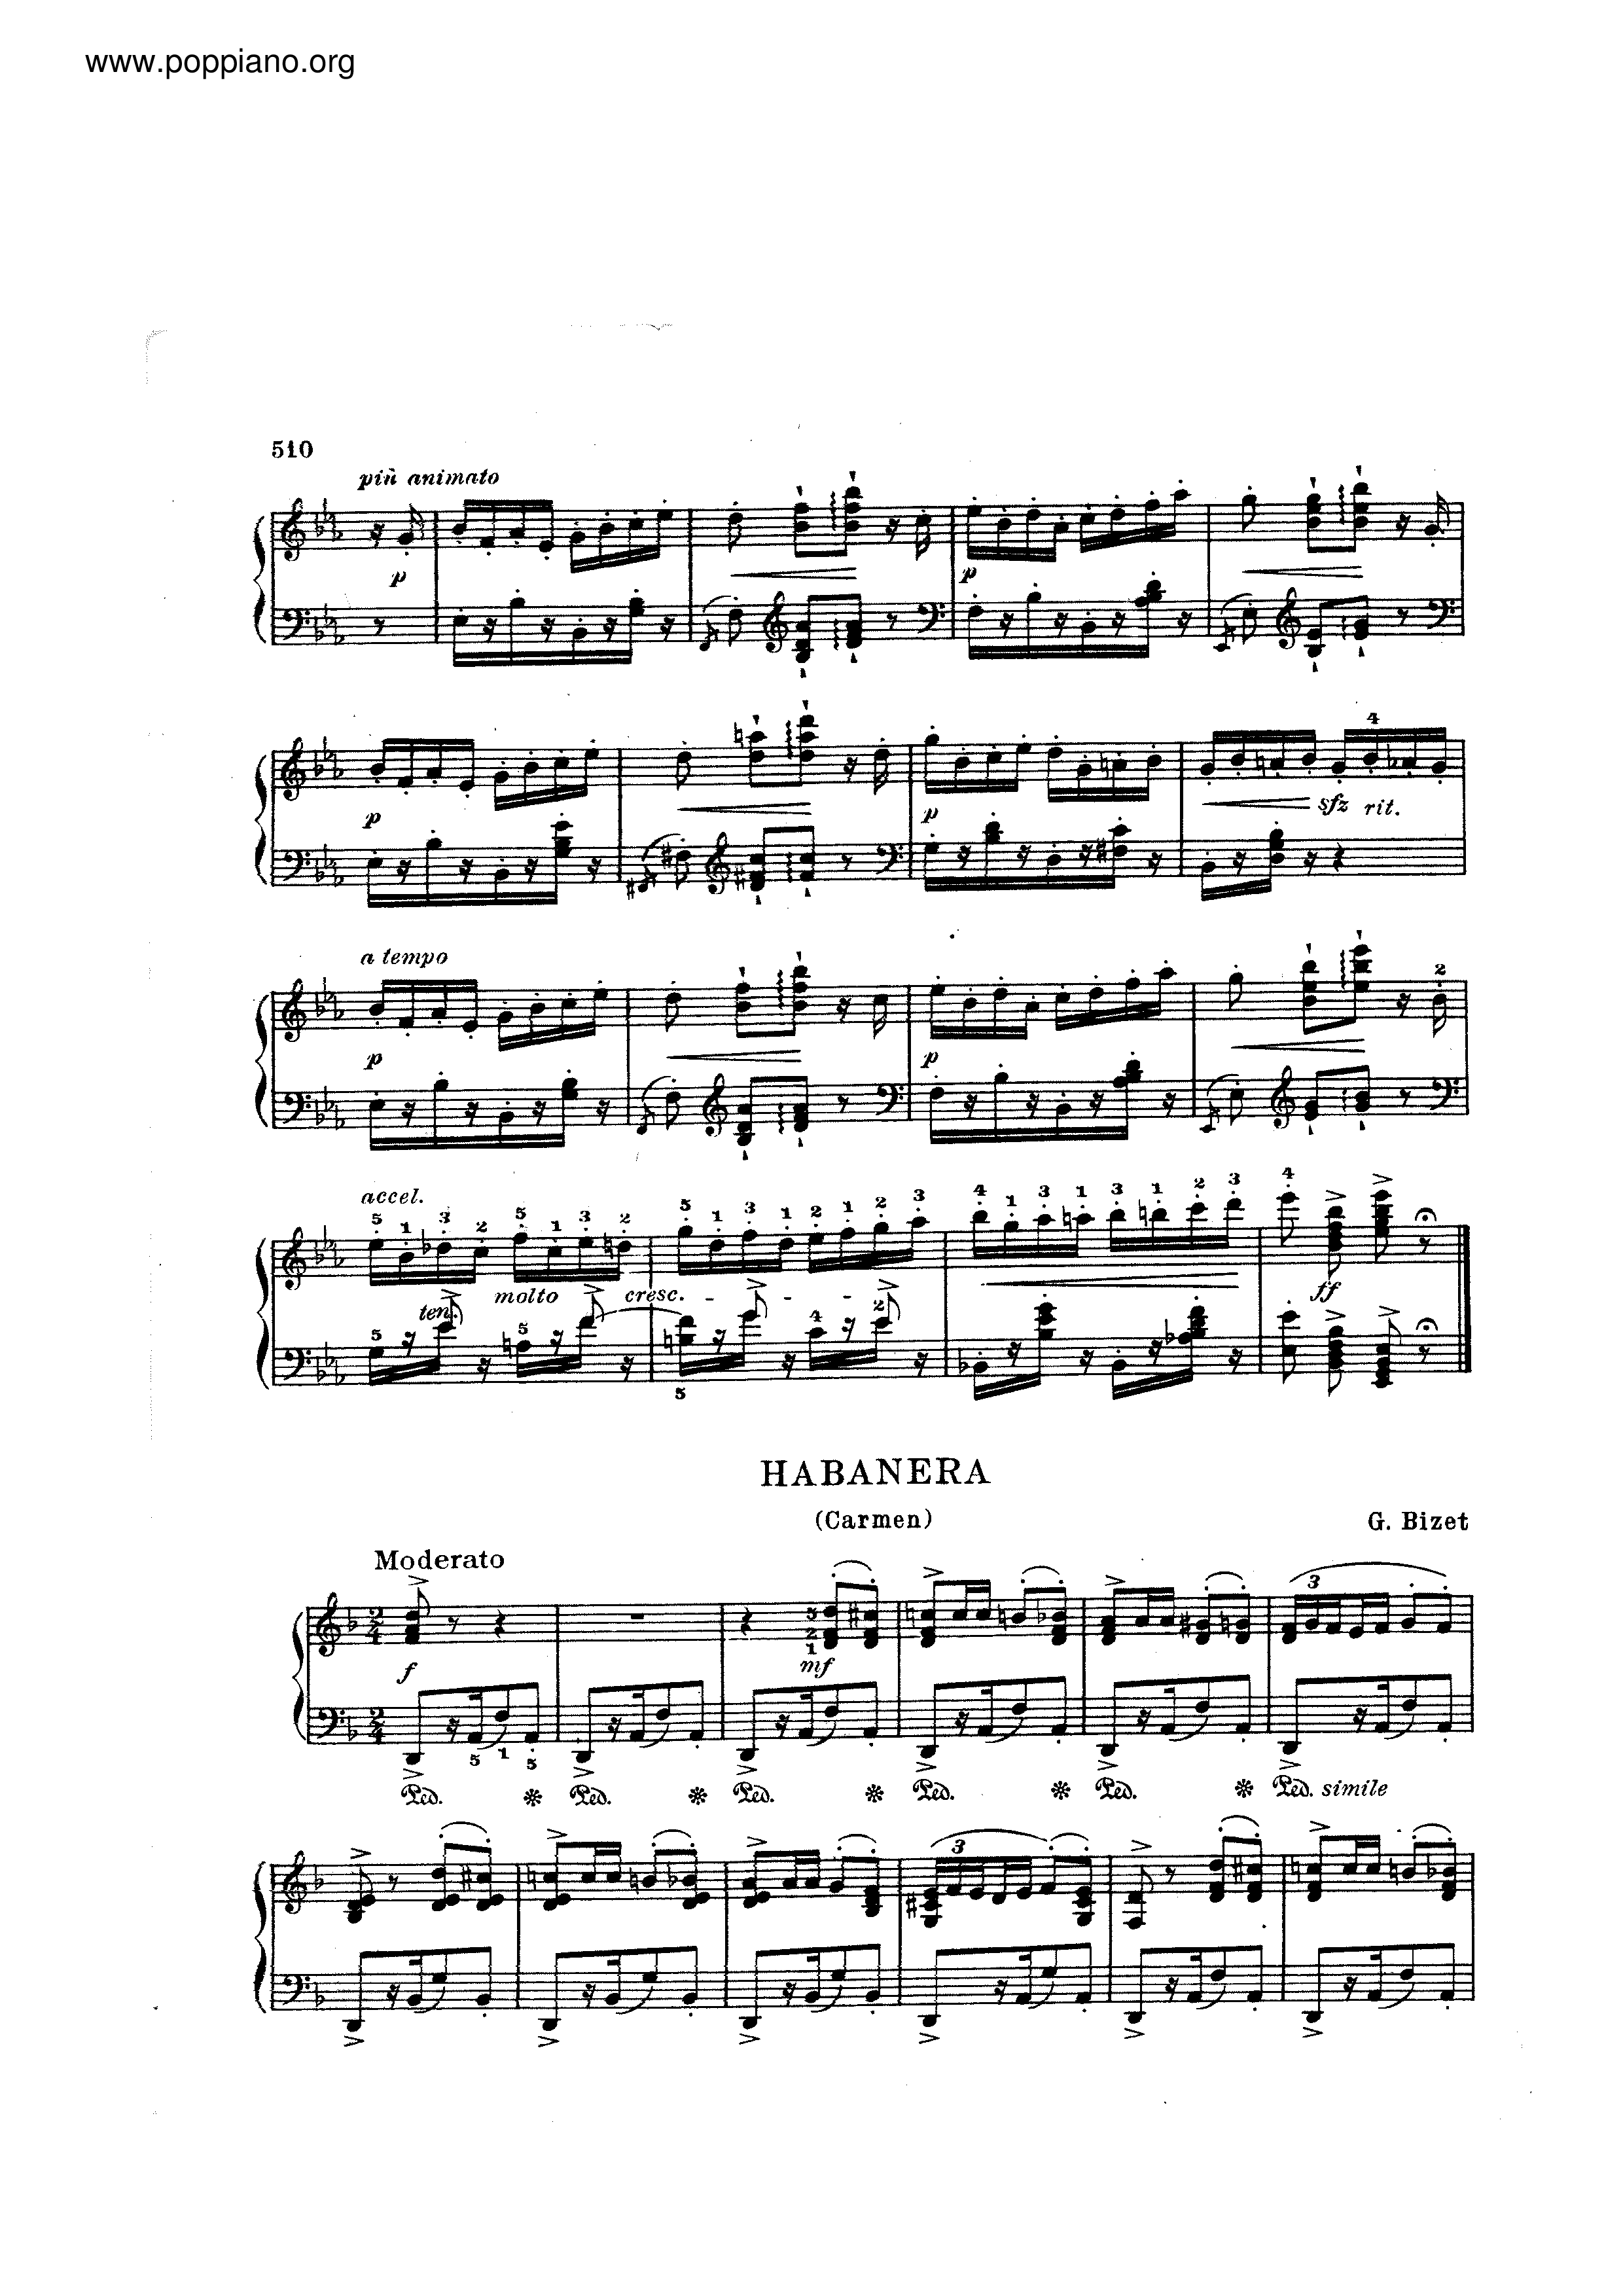 Carmen - Habaneraピアノ譜